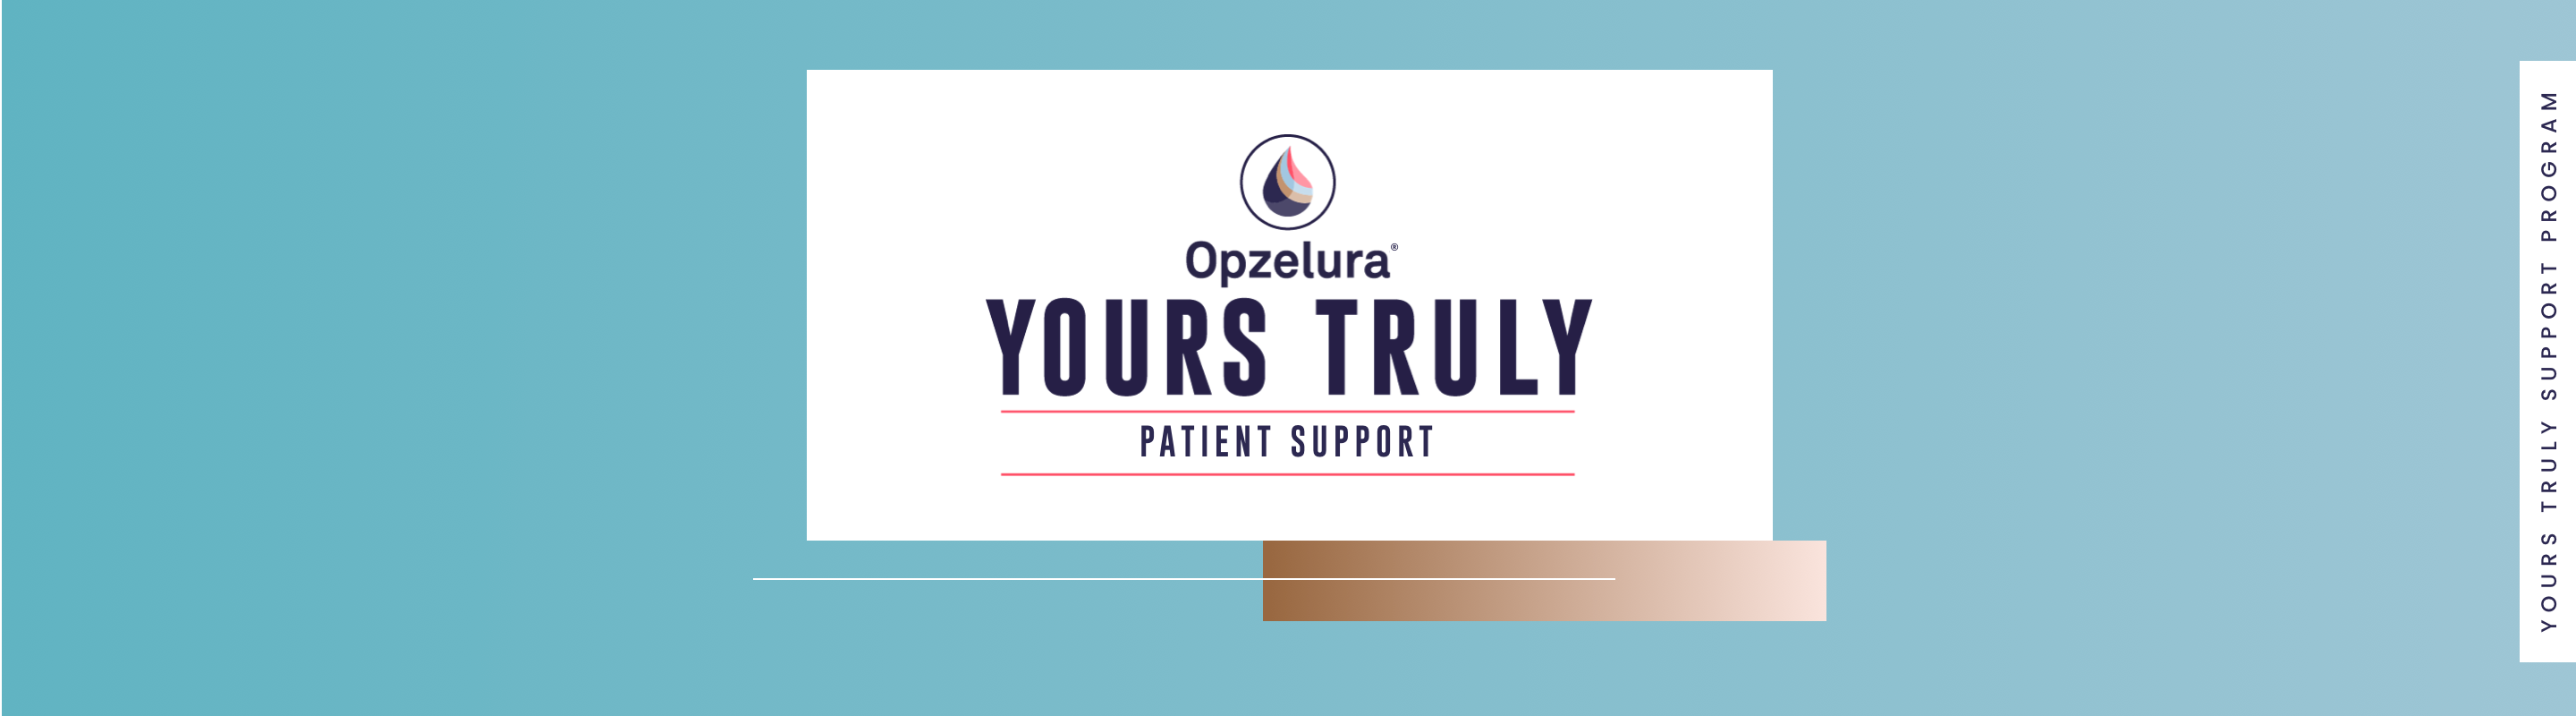 OPZELURA Yours Truly Support Program